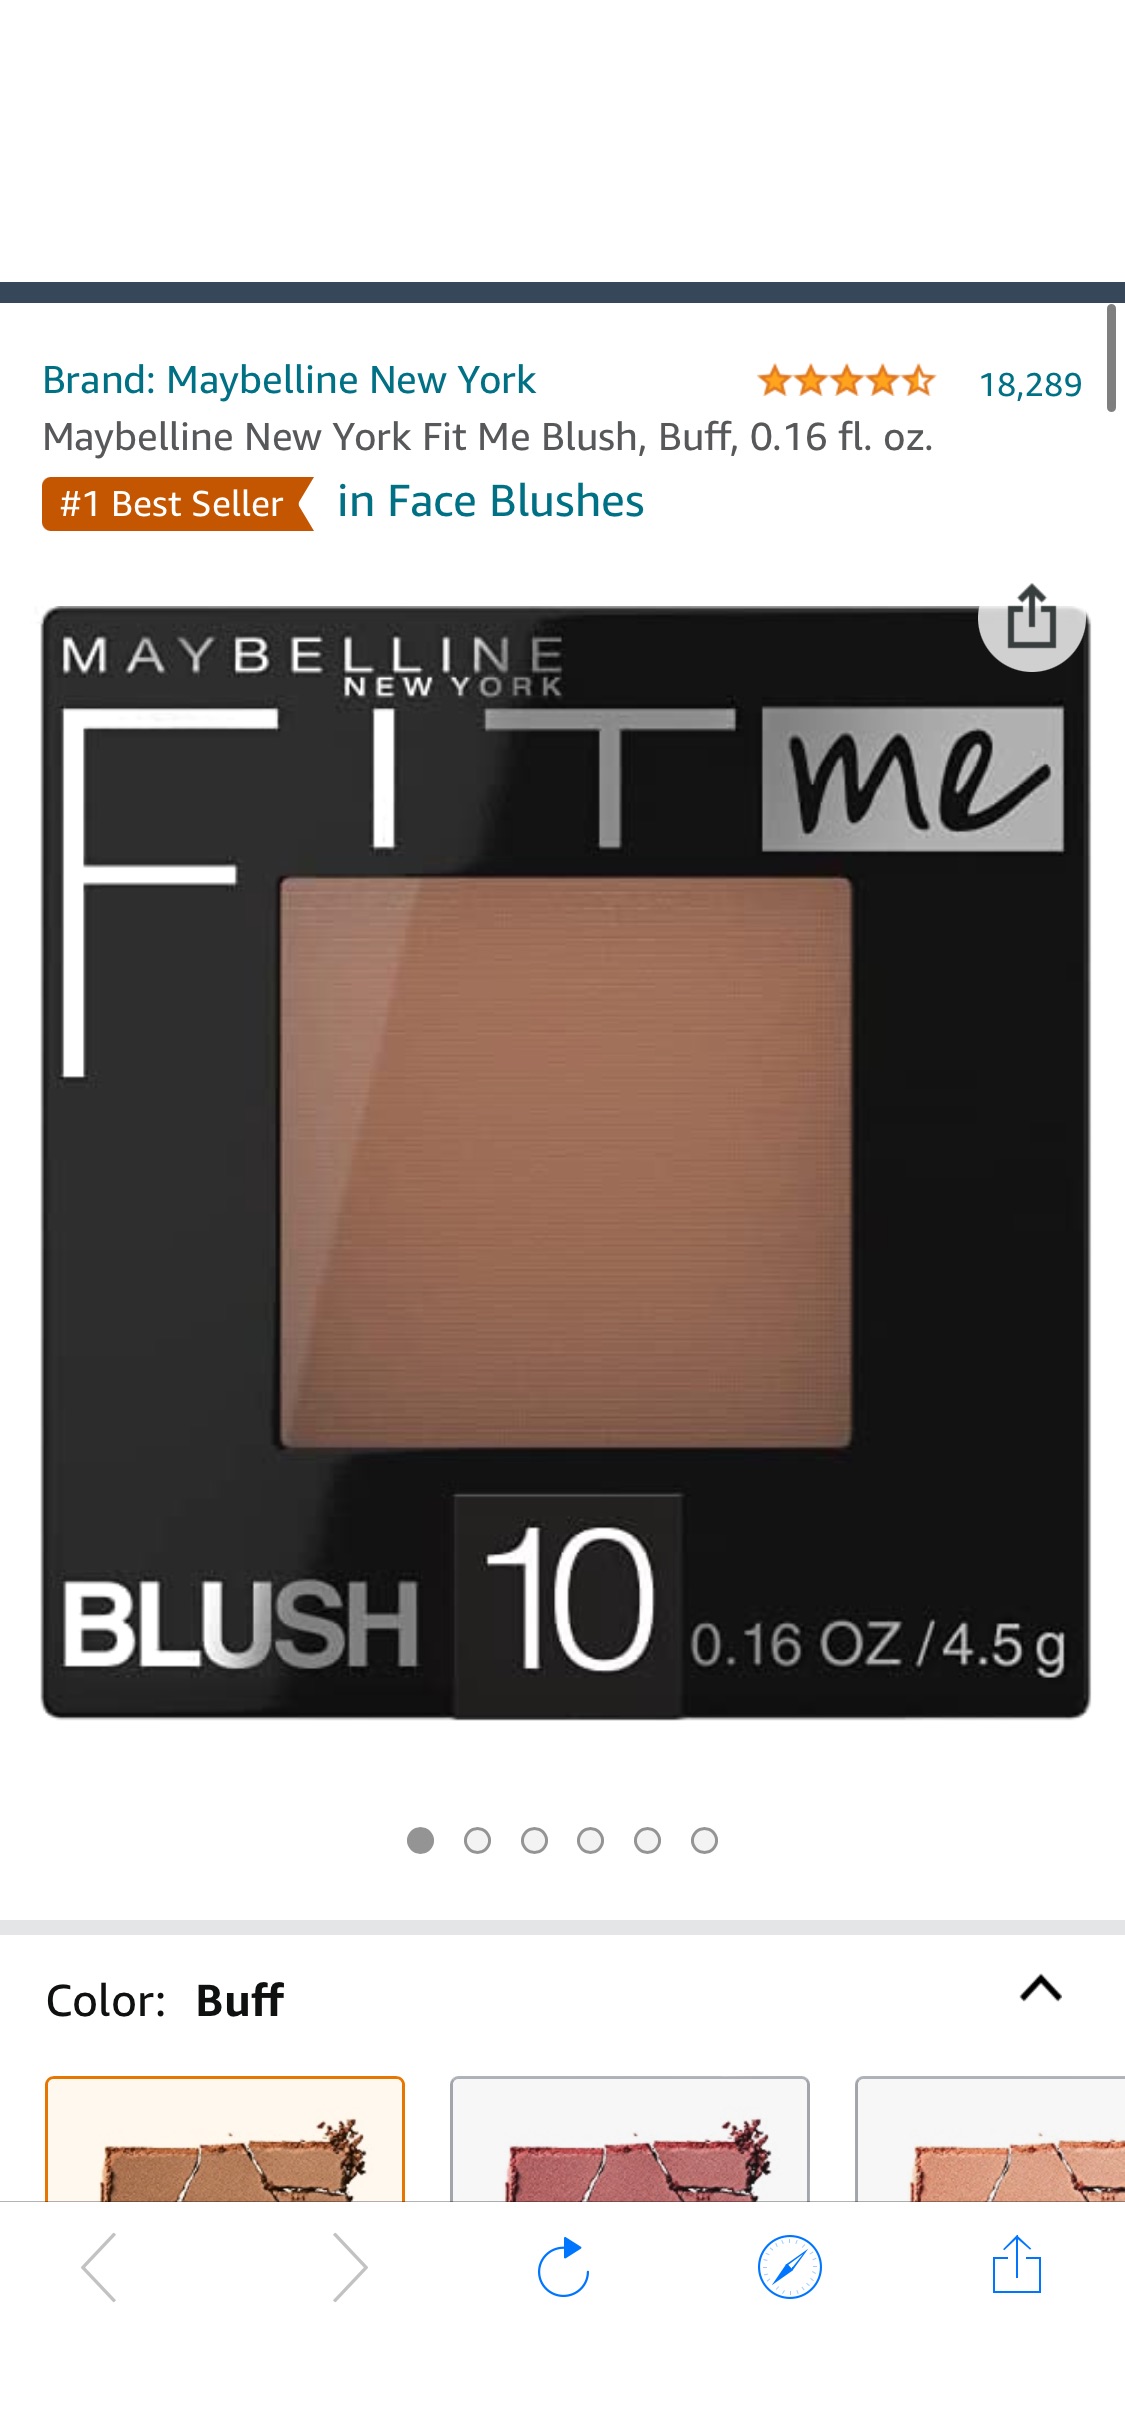 Amazon.com 腮红折扣: Maybelline New York Fit Me Blush, Buff, 0.16 fl. oz.